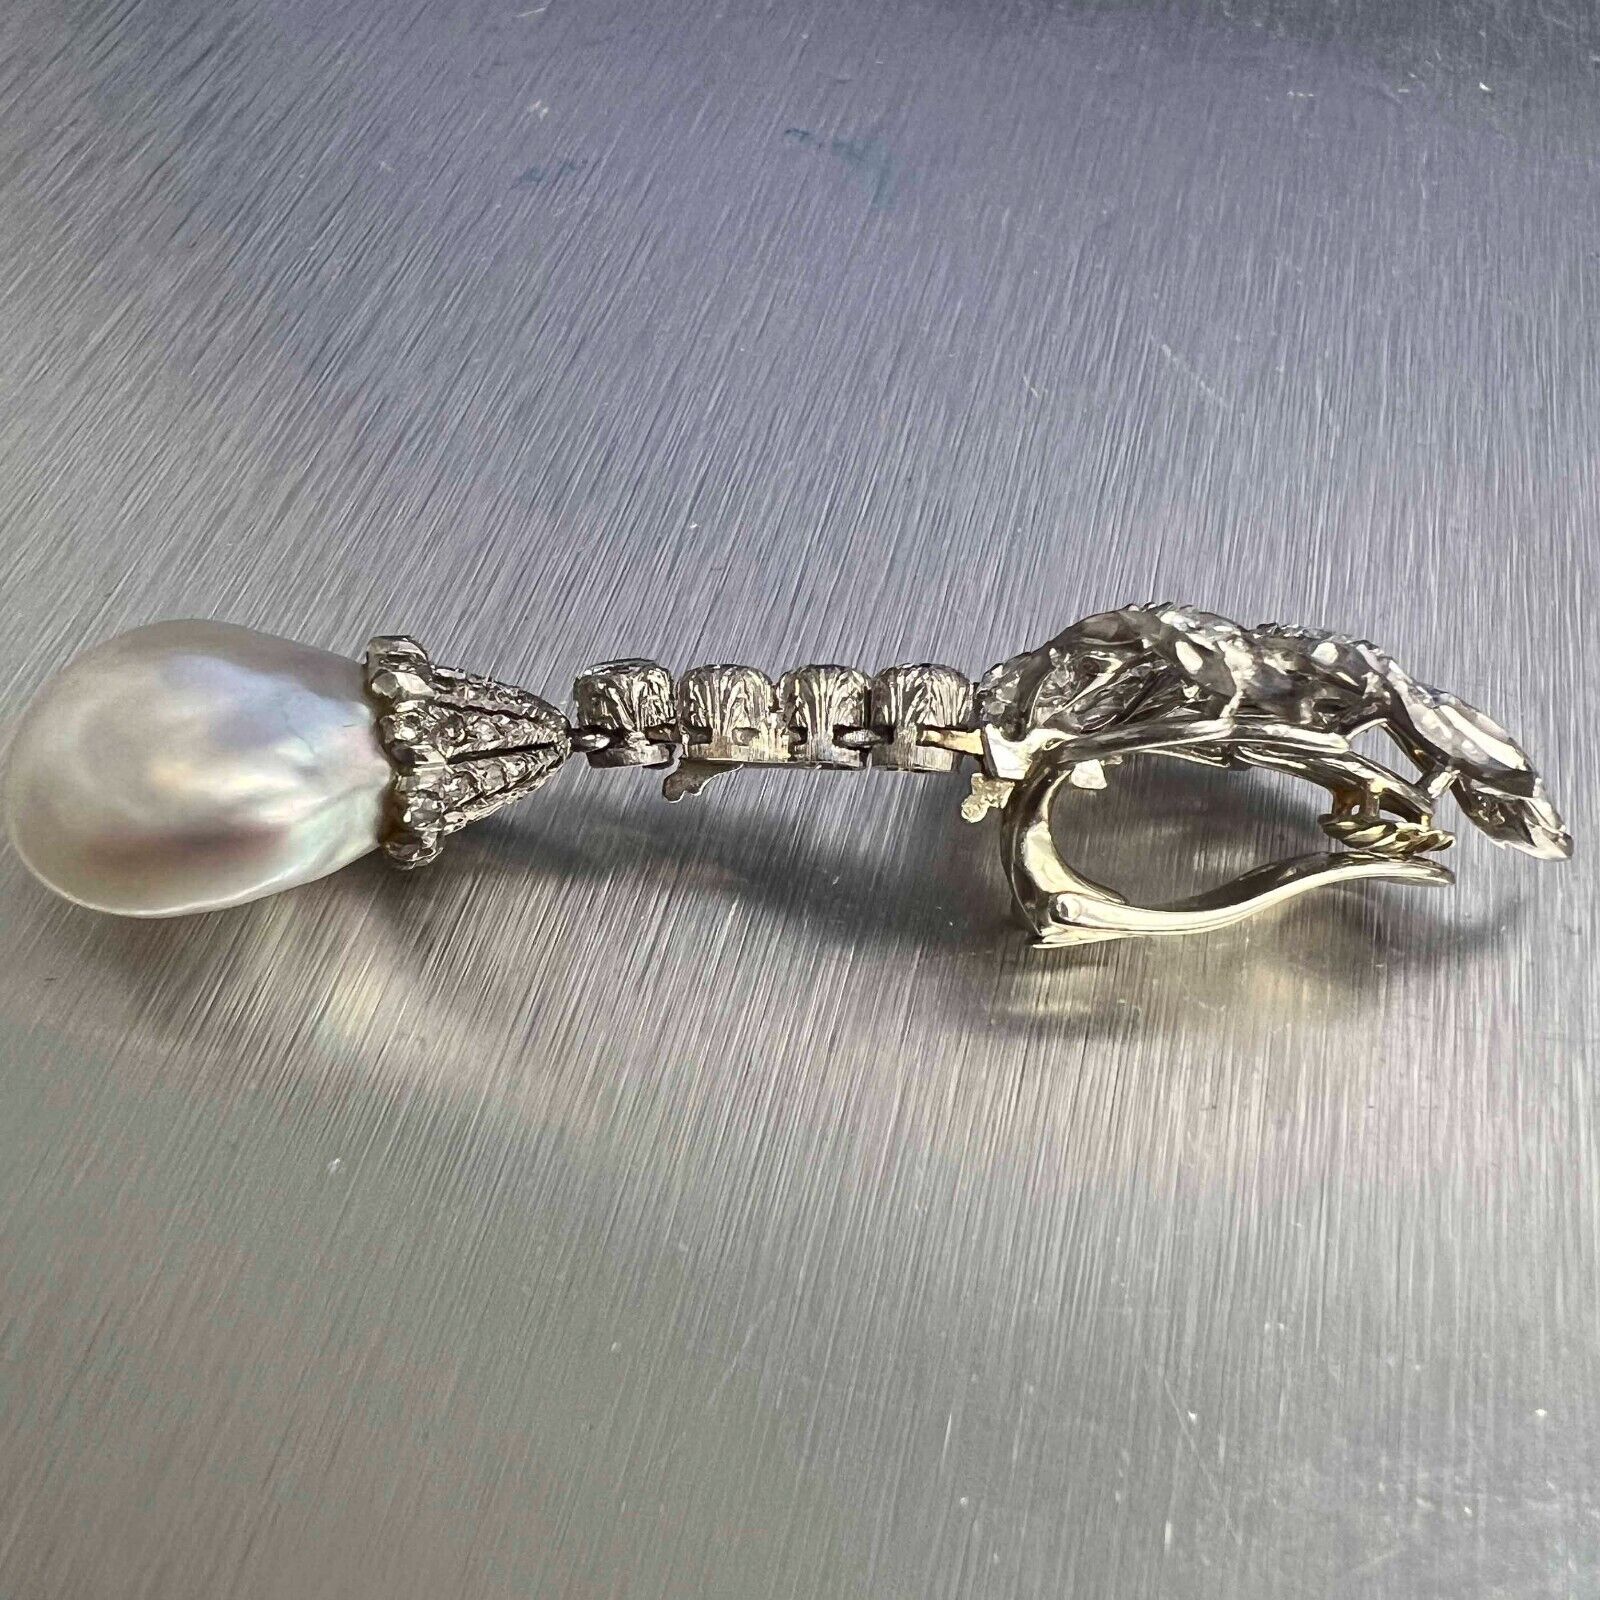 Vintage 70s Mario Buccellati Platinum Diamond Pearl Dangle Earrings 5.72ctw BOX